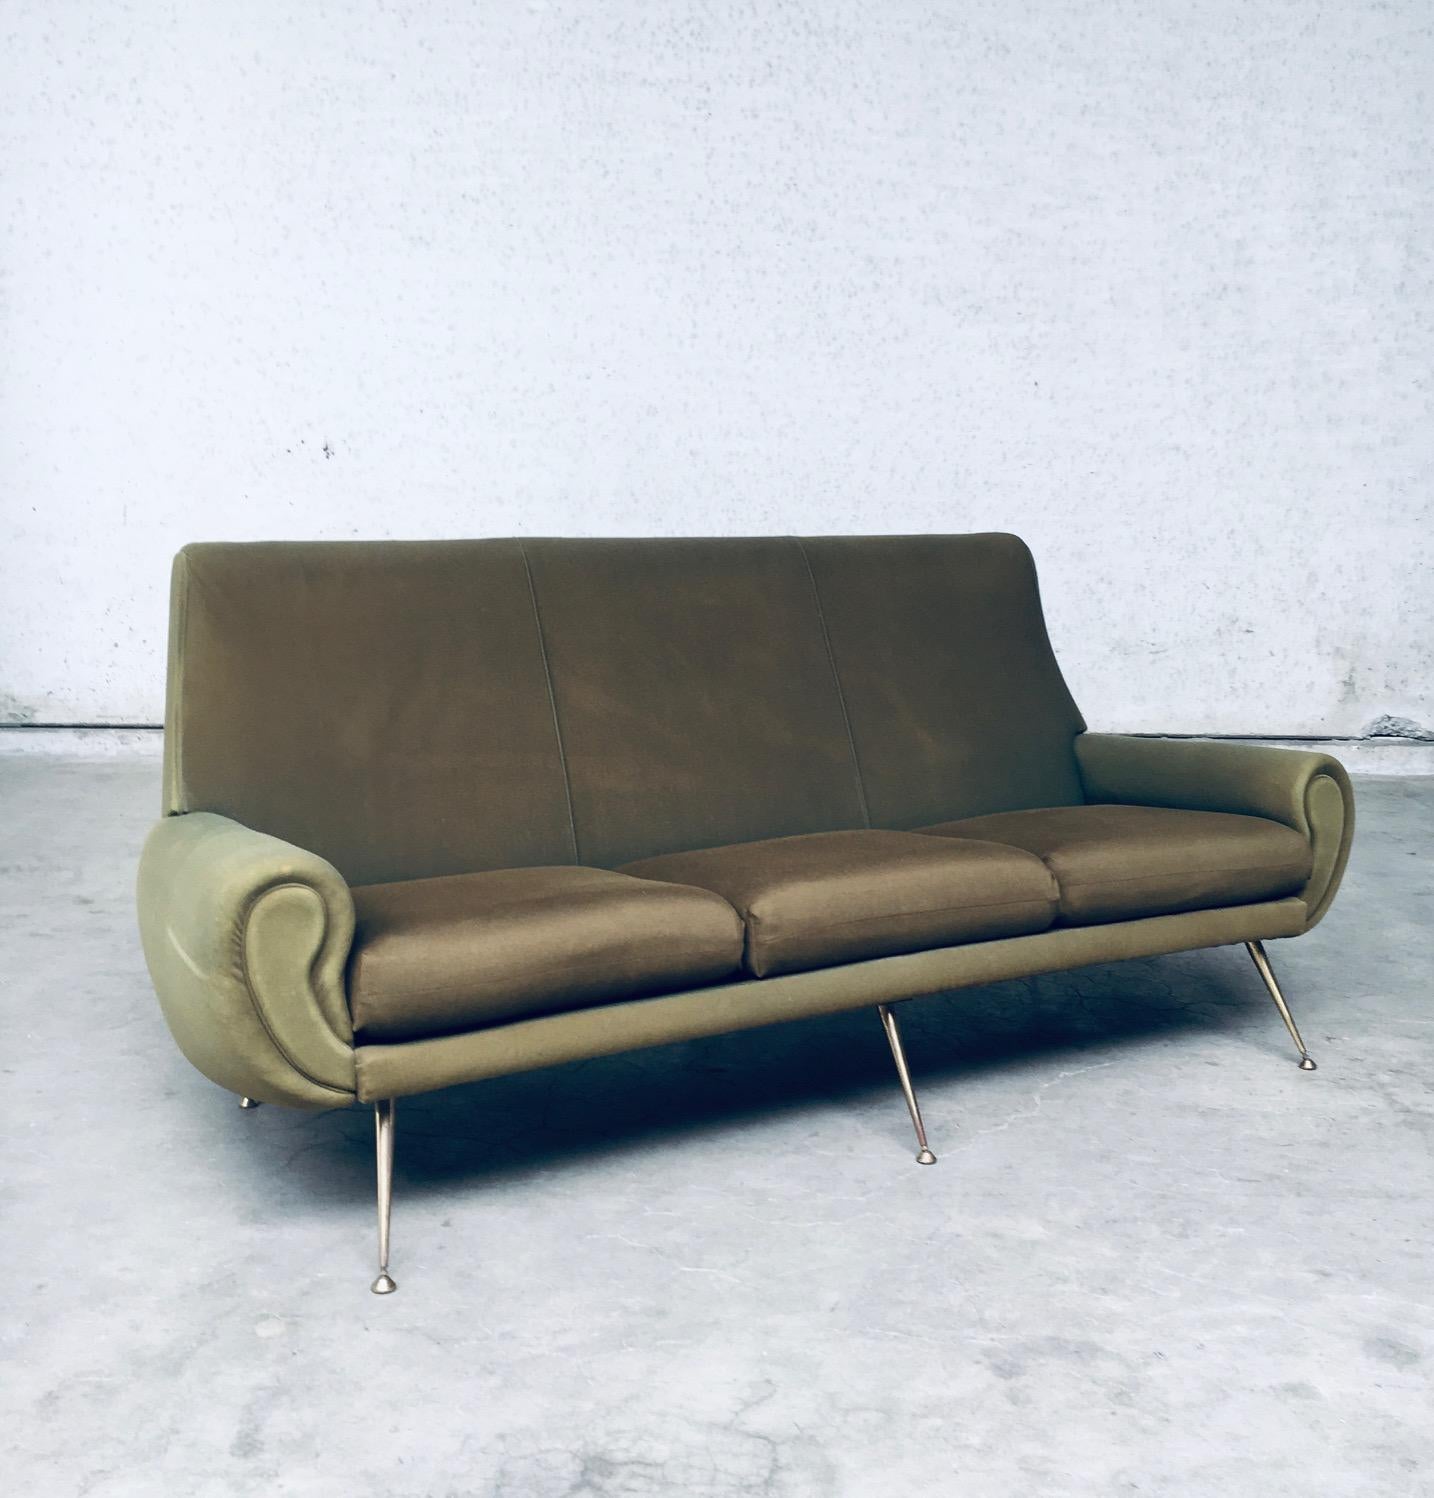 Mid-20th Century Italian Design Mid-Century Modern Sofa by Gigi Radice for Minotti, Italy, 1950's